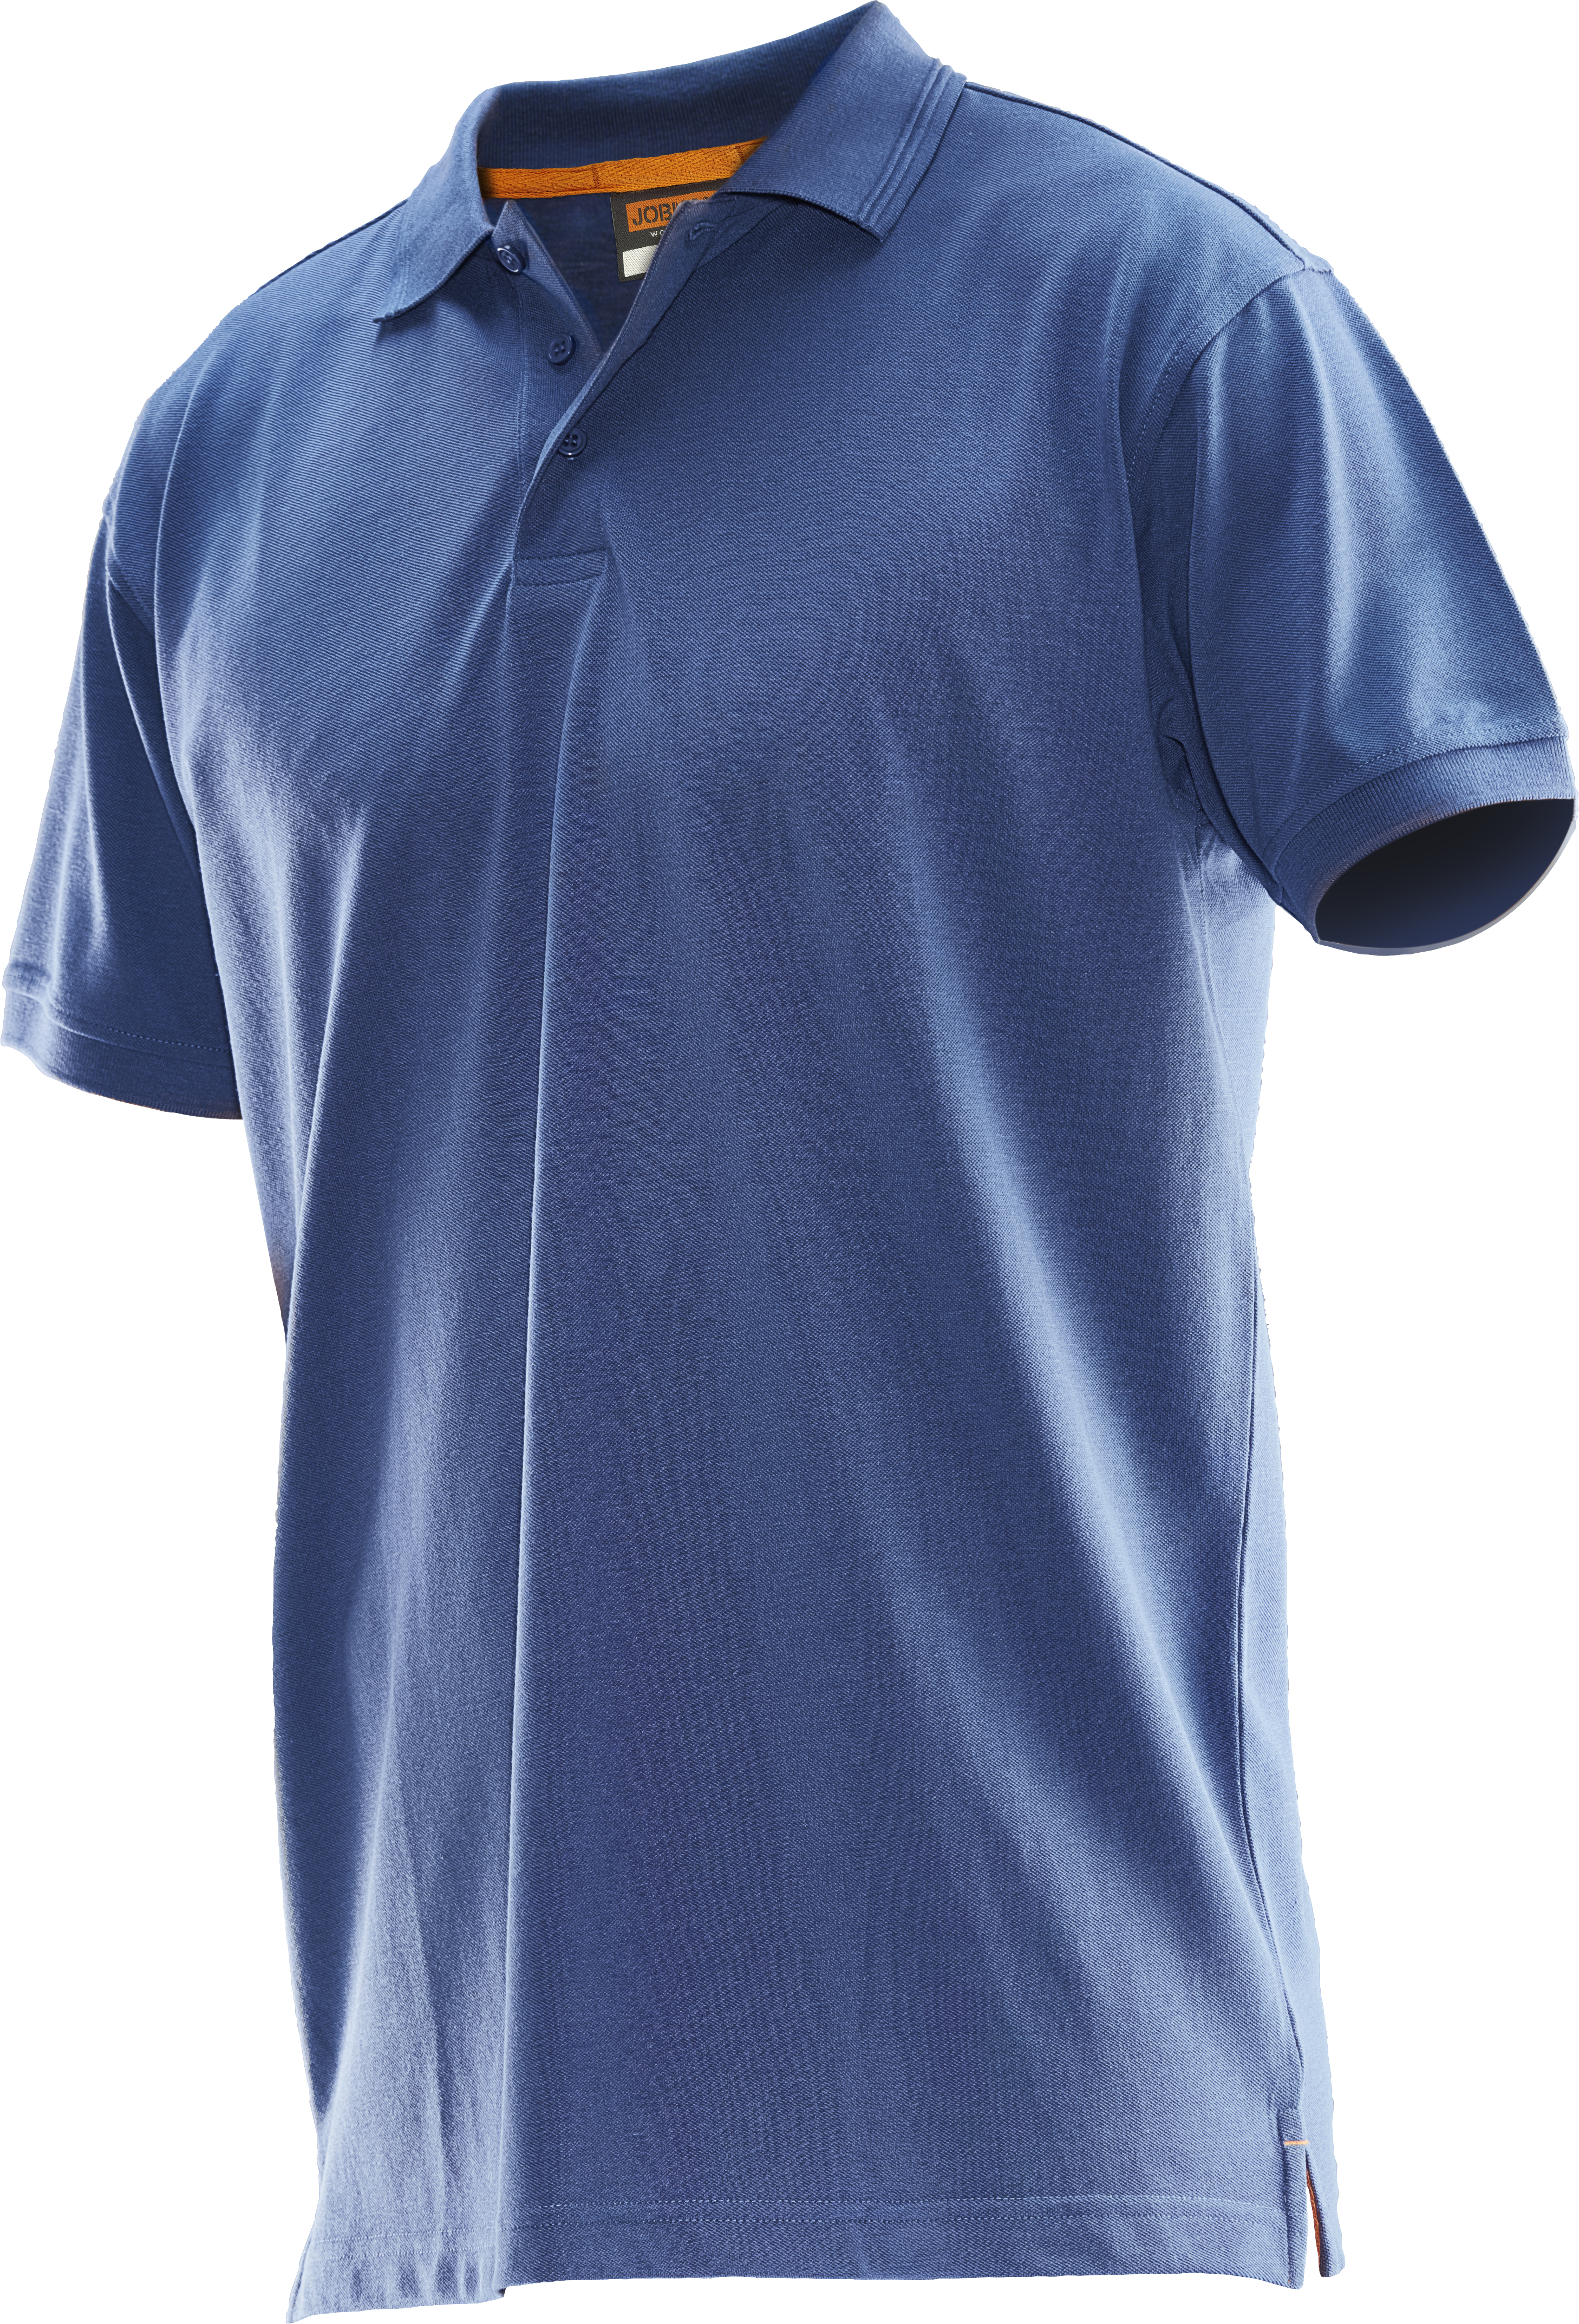 5564 T-shirt polo XL bleu ciel